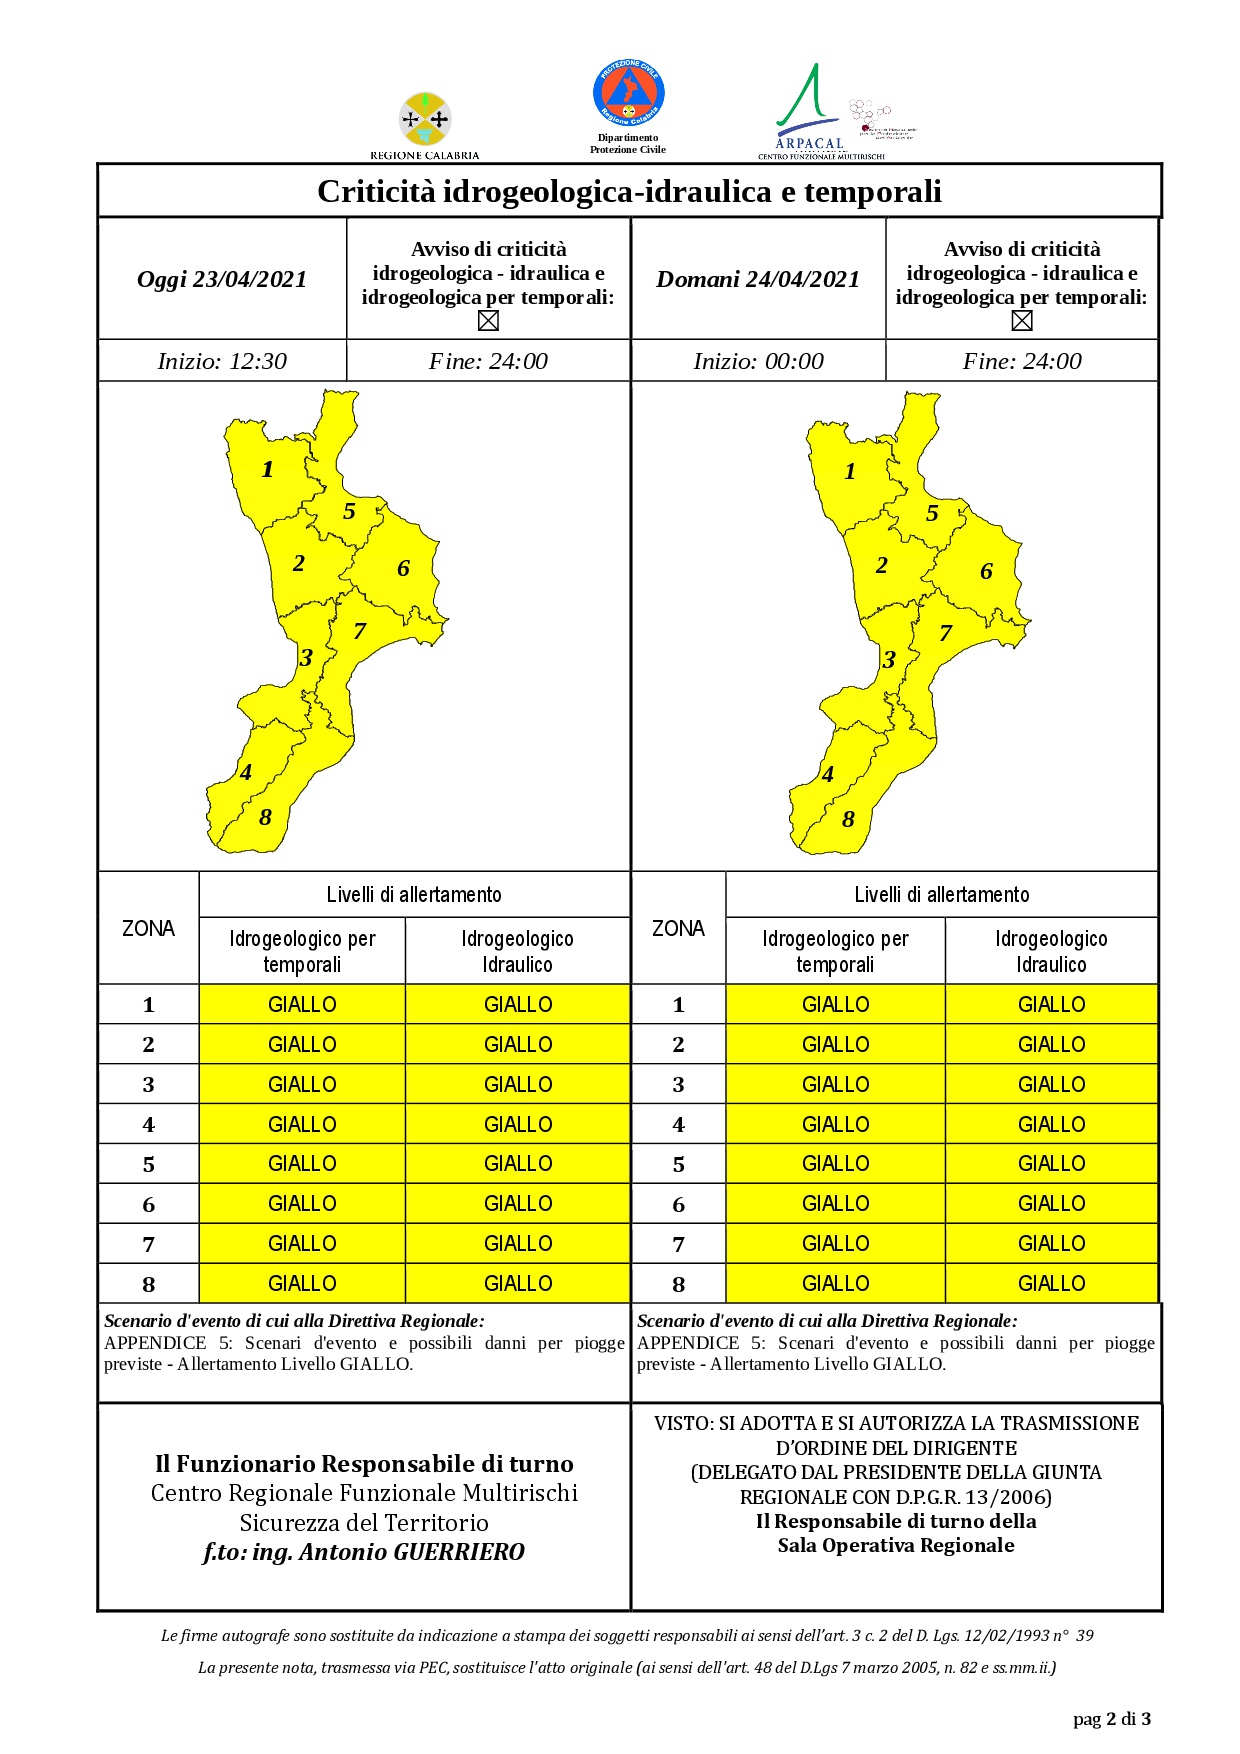 Criticità idrogeologica-idraulica e temporali in Calabria 23-04-2021